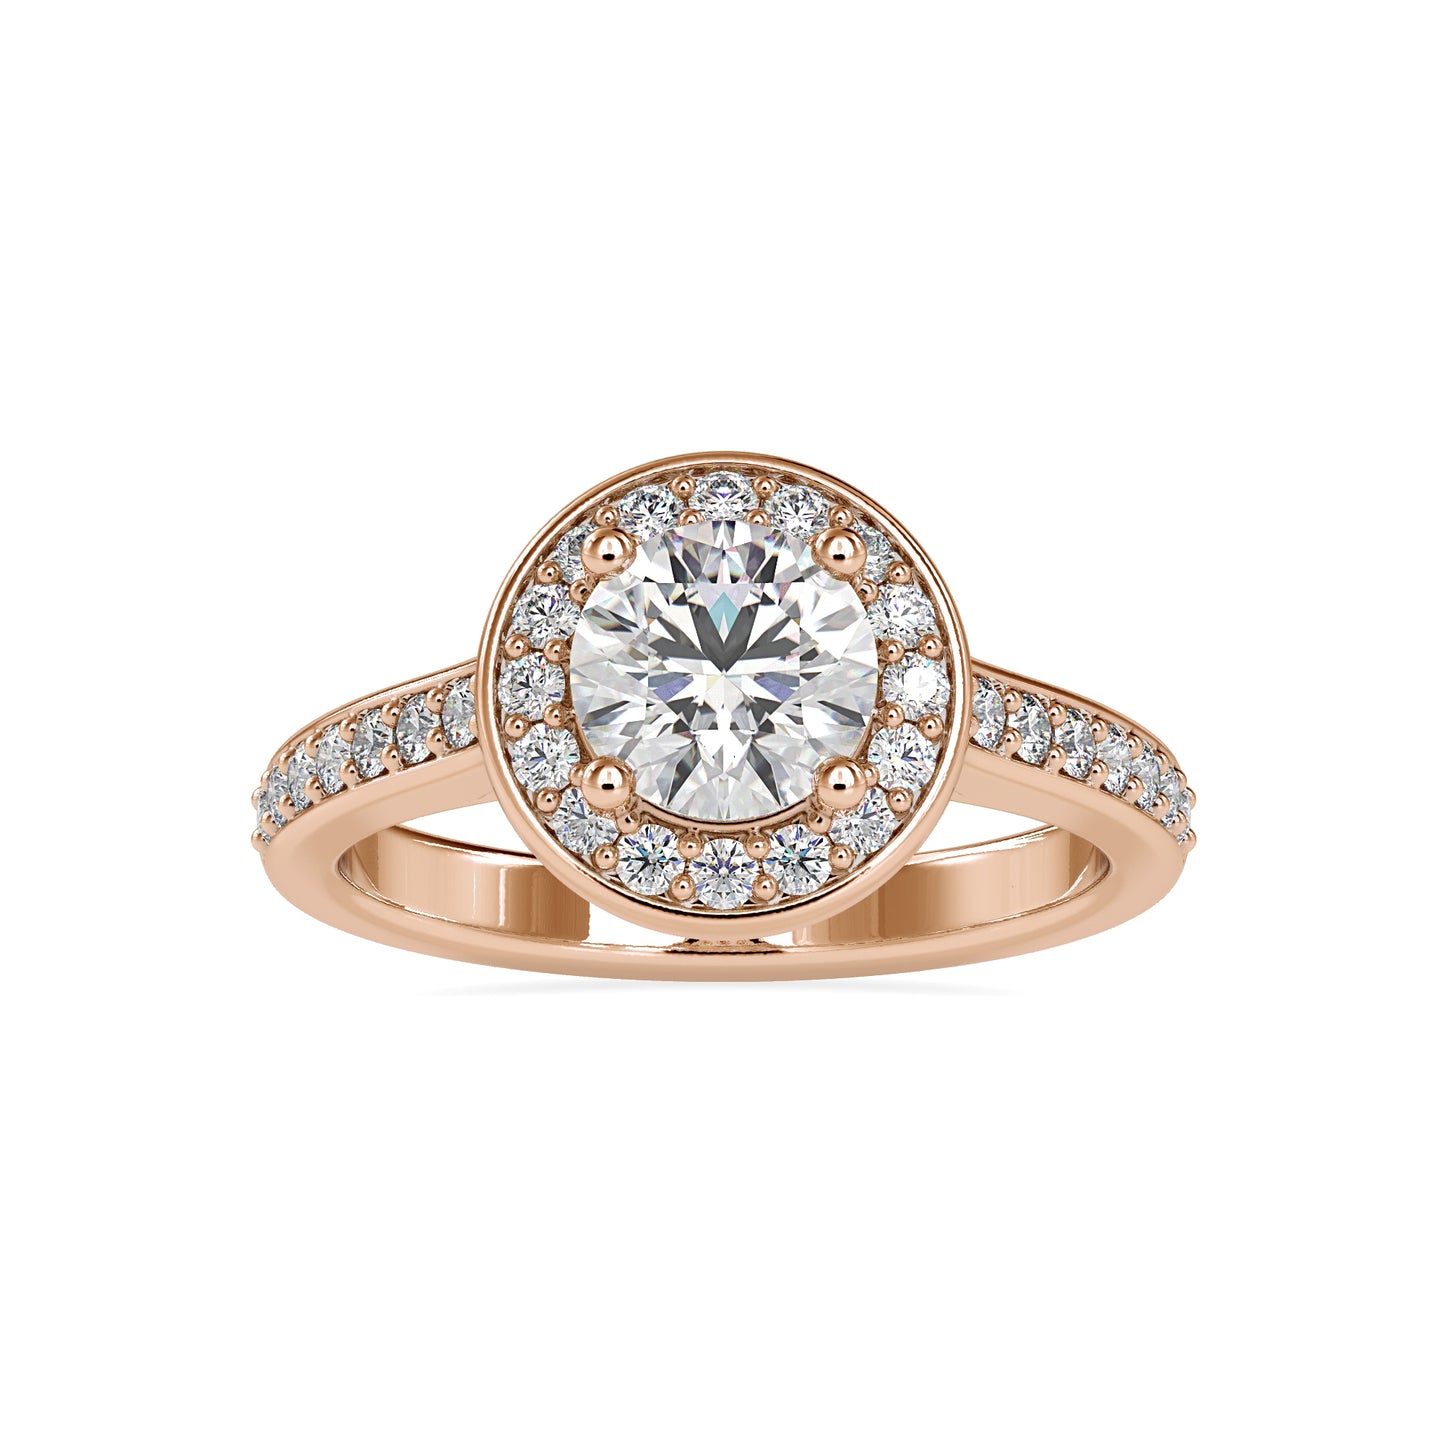 1.57CTW Round Diamond Engagement Ring